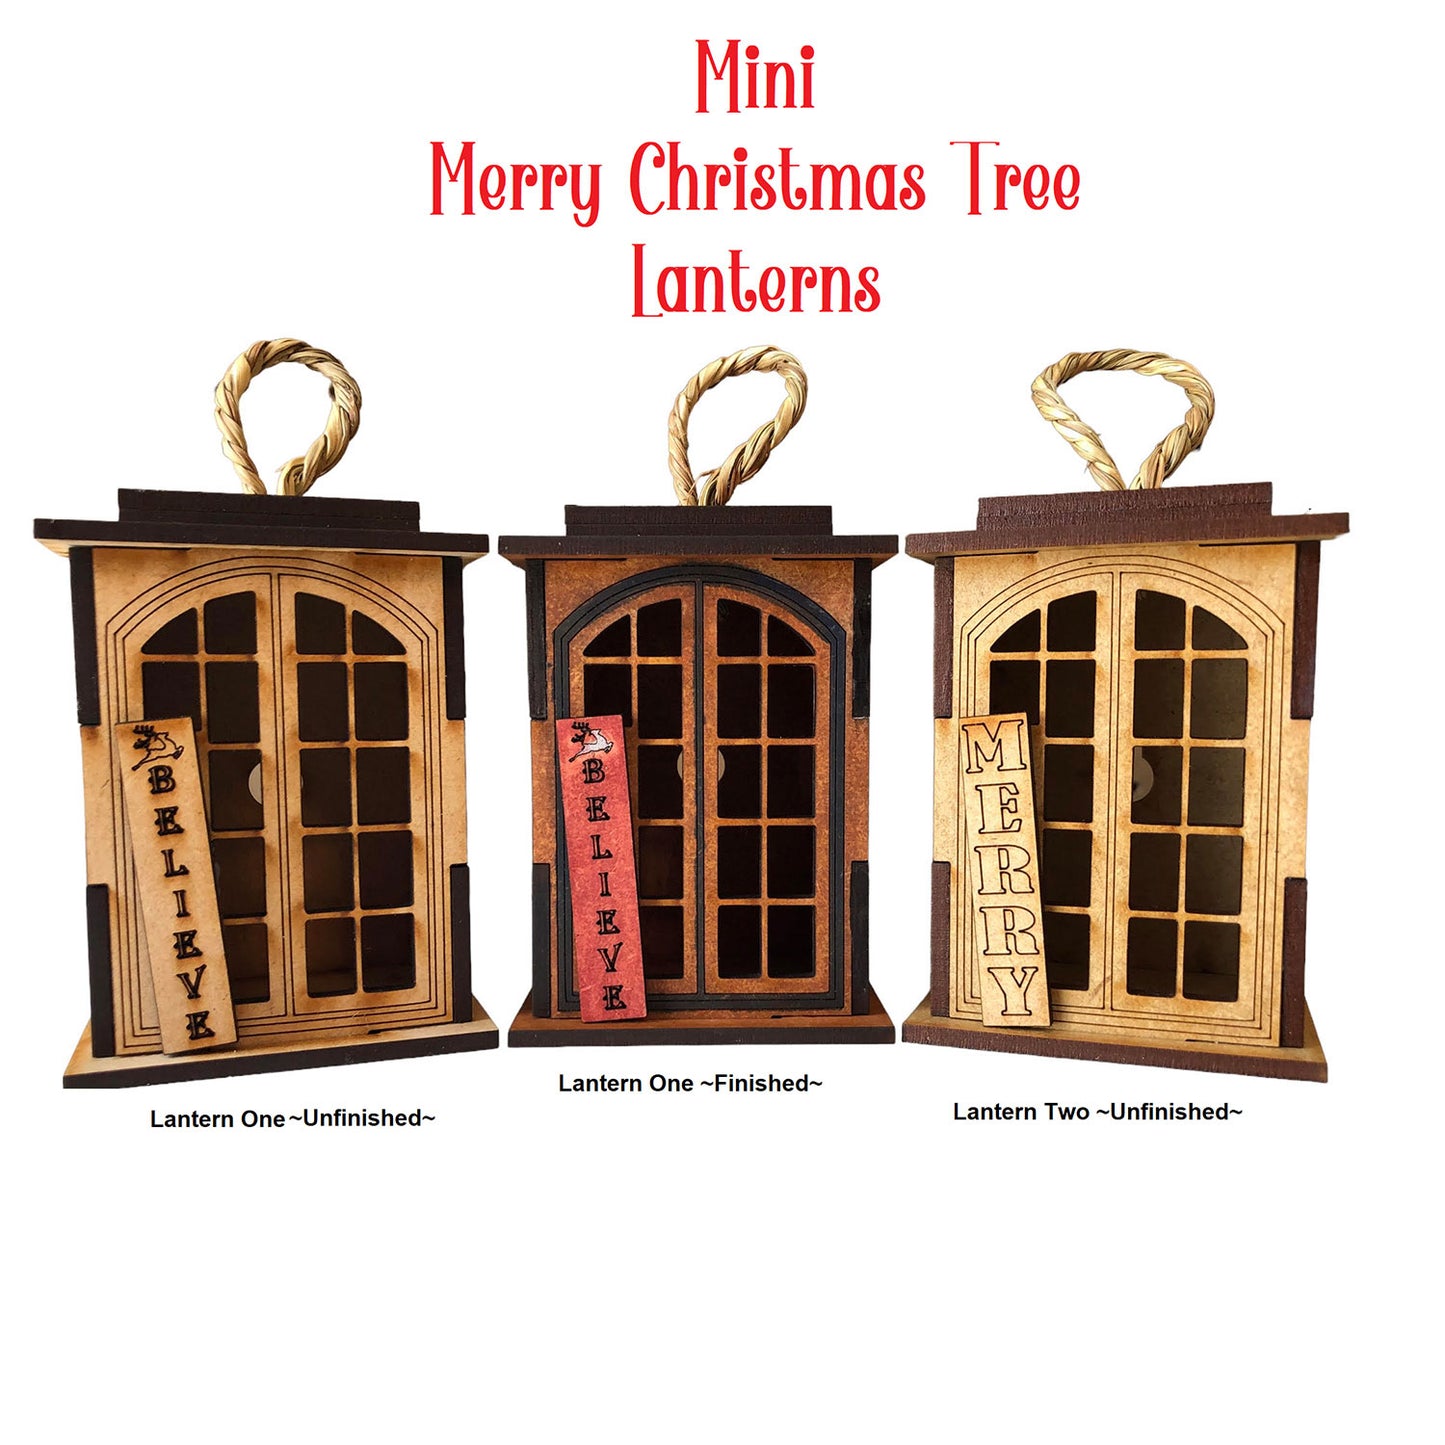 Pair of Mini Merry Christmas Tree Lanterns